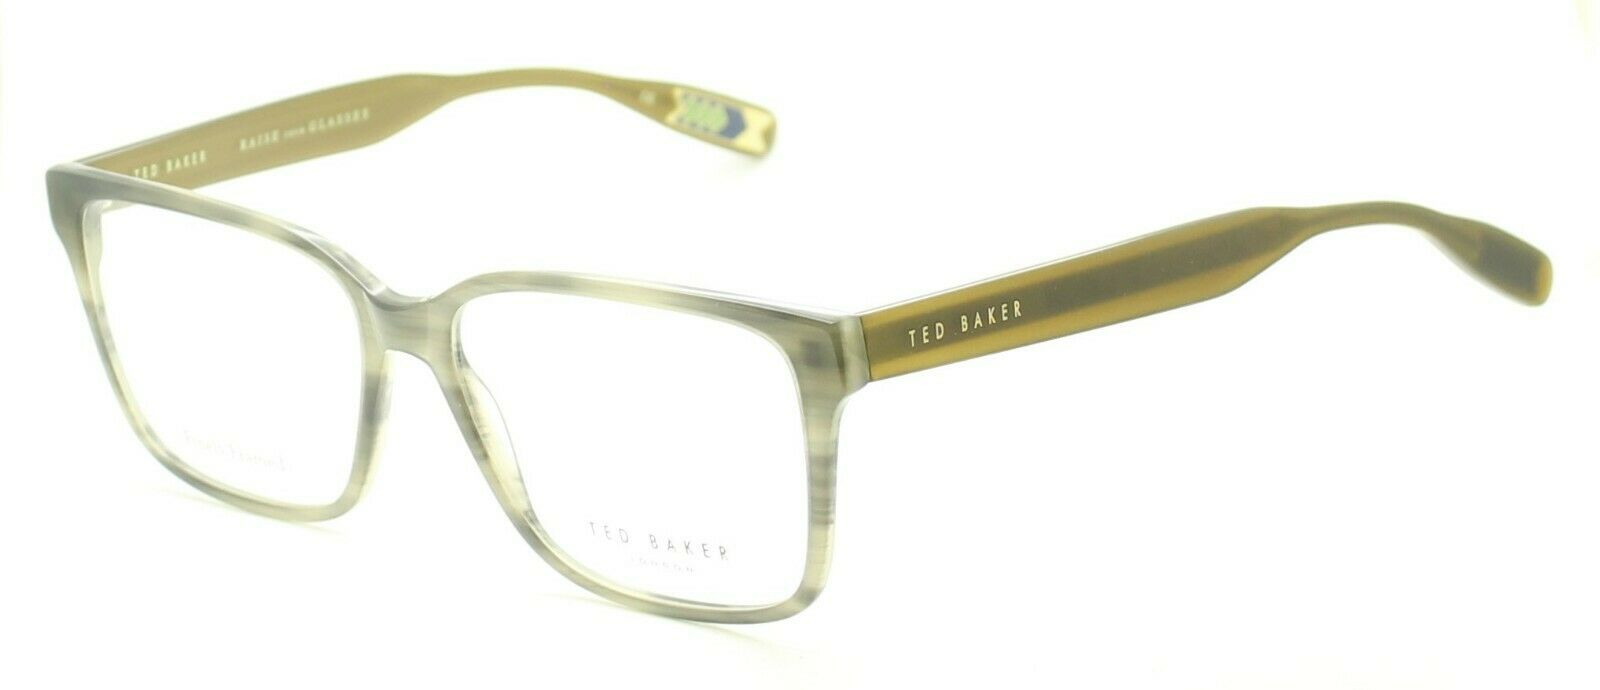 TED BAKER Noble 8198 953 55mm FRAMES Glasses Eyeglasses RX Optical Eyewear - New